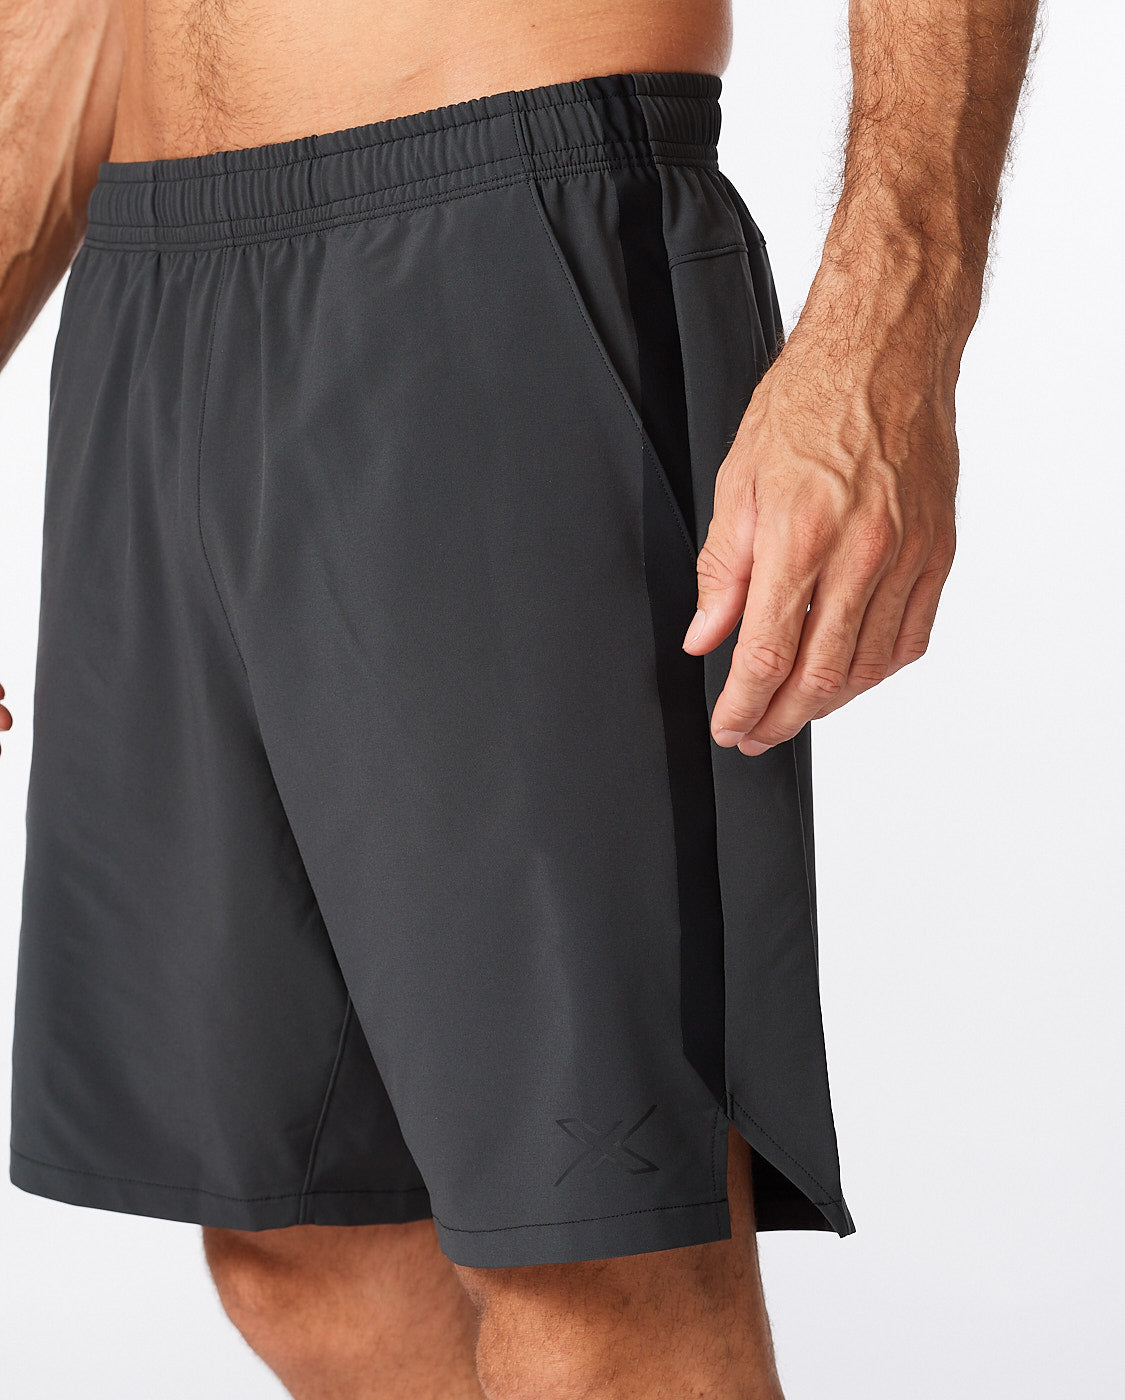 Motion 8 inch shorts - Black - Shorts